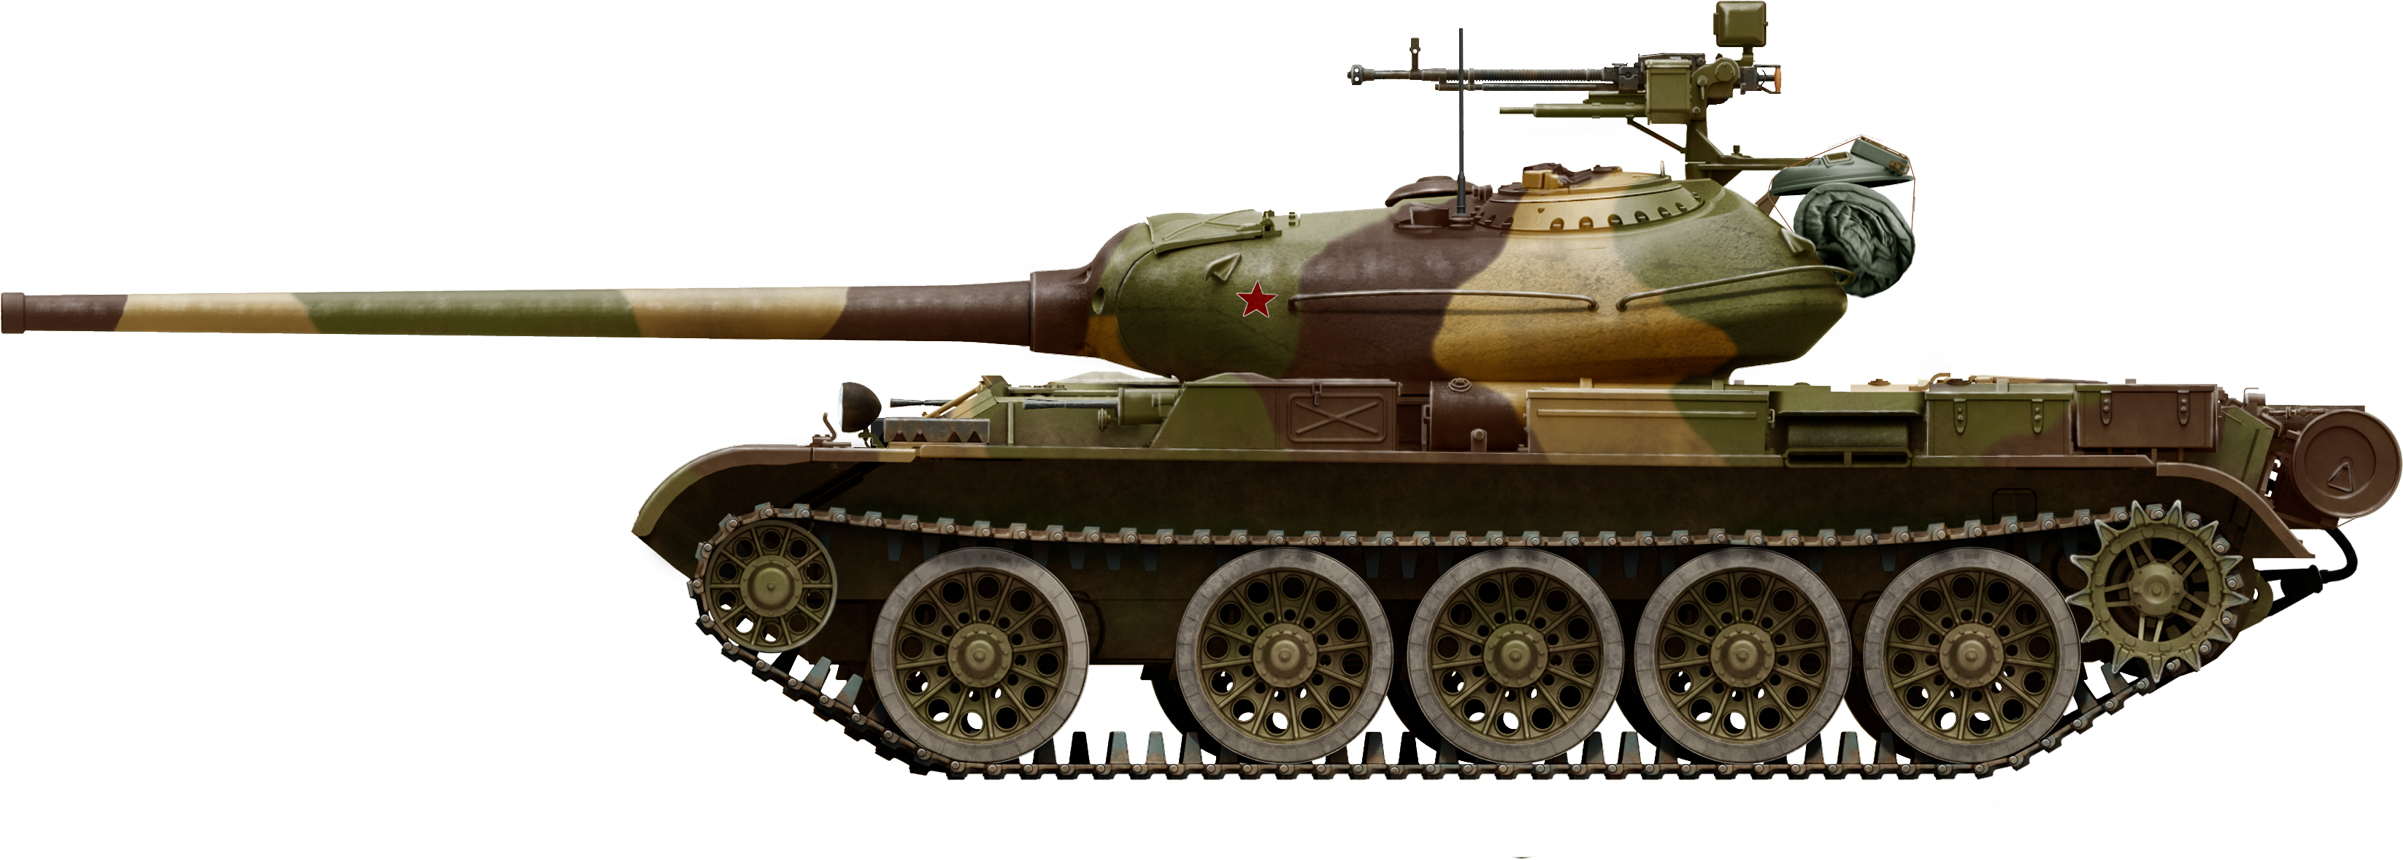 27 54 1 35. Т-54 средний танк. Танк в 44 сбоку. Танк т 44 вид сбоку. Т 54 сбоку.